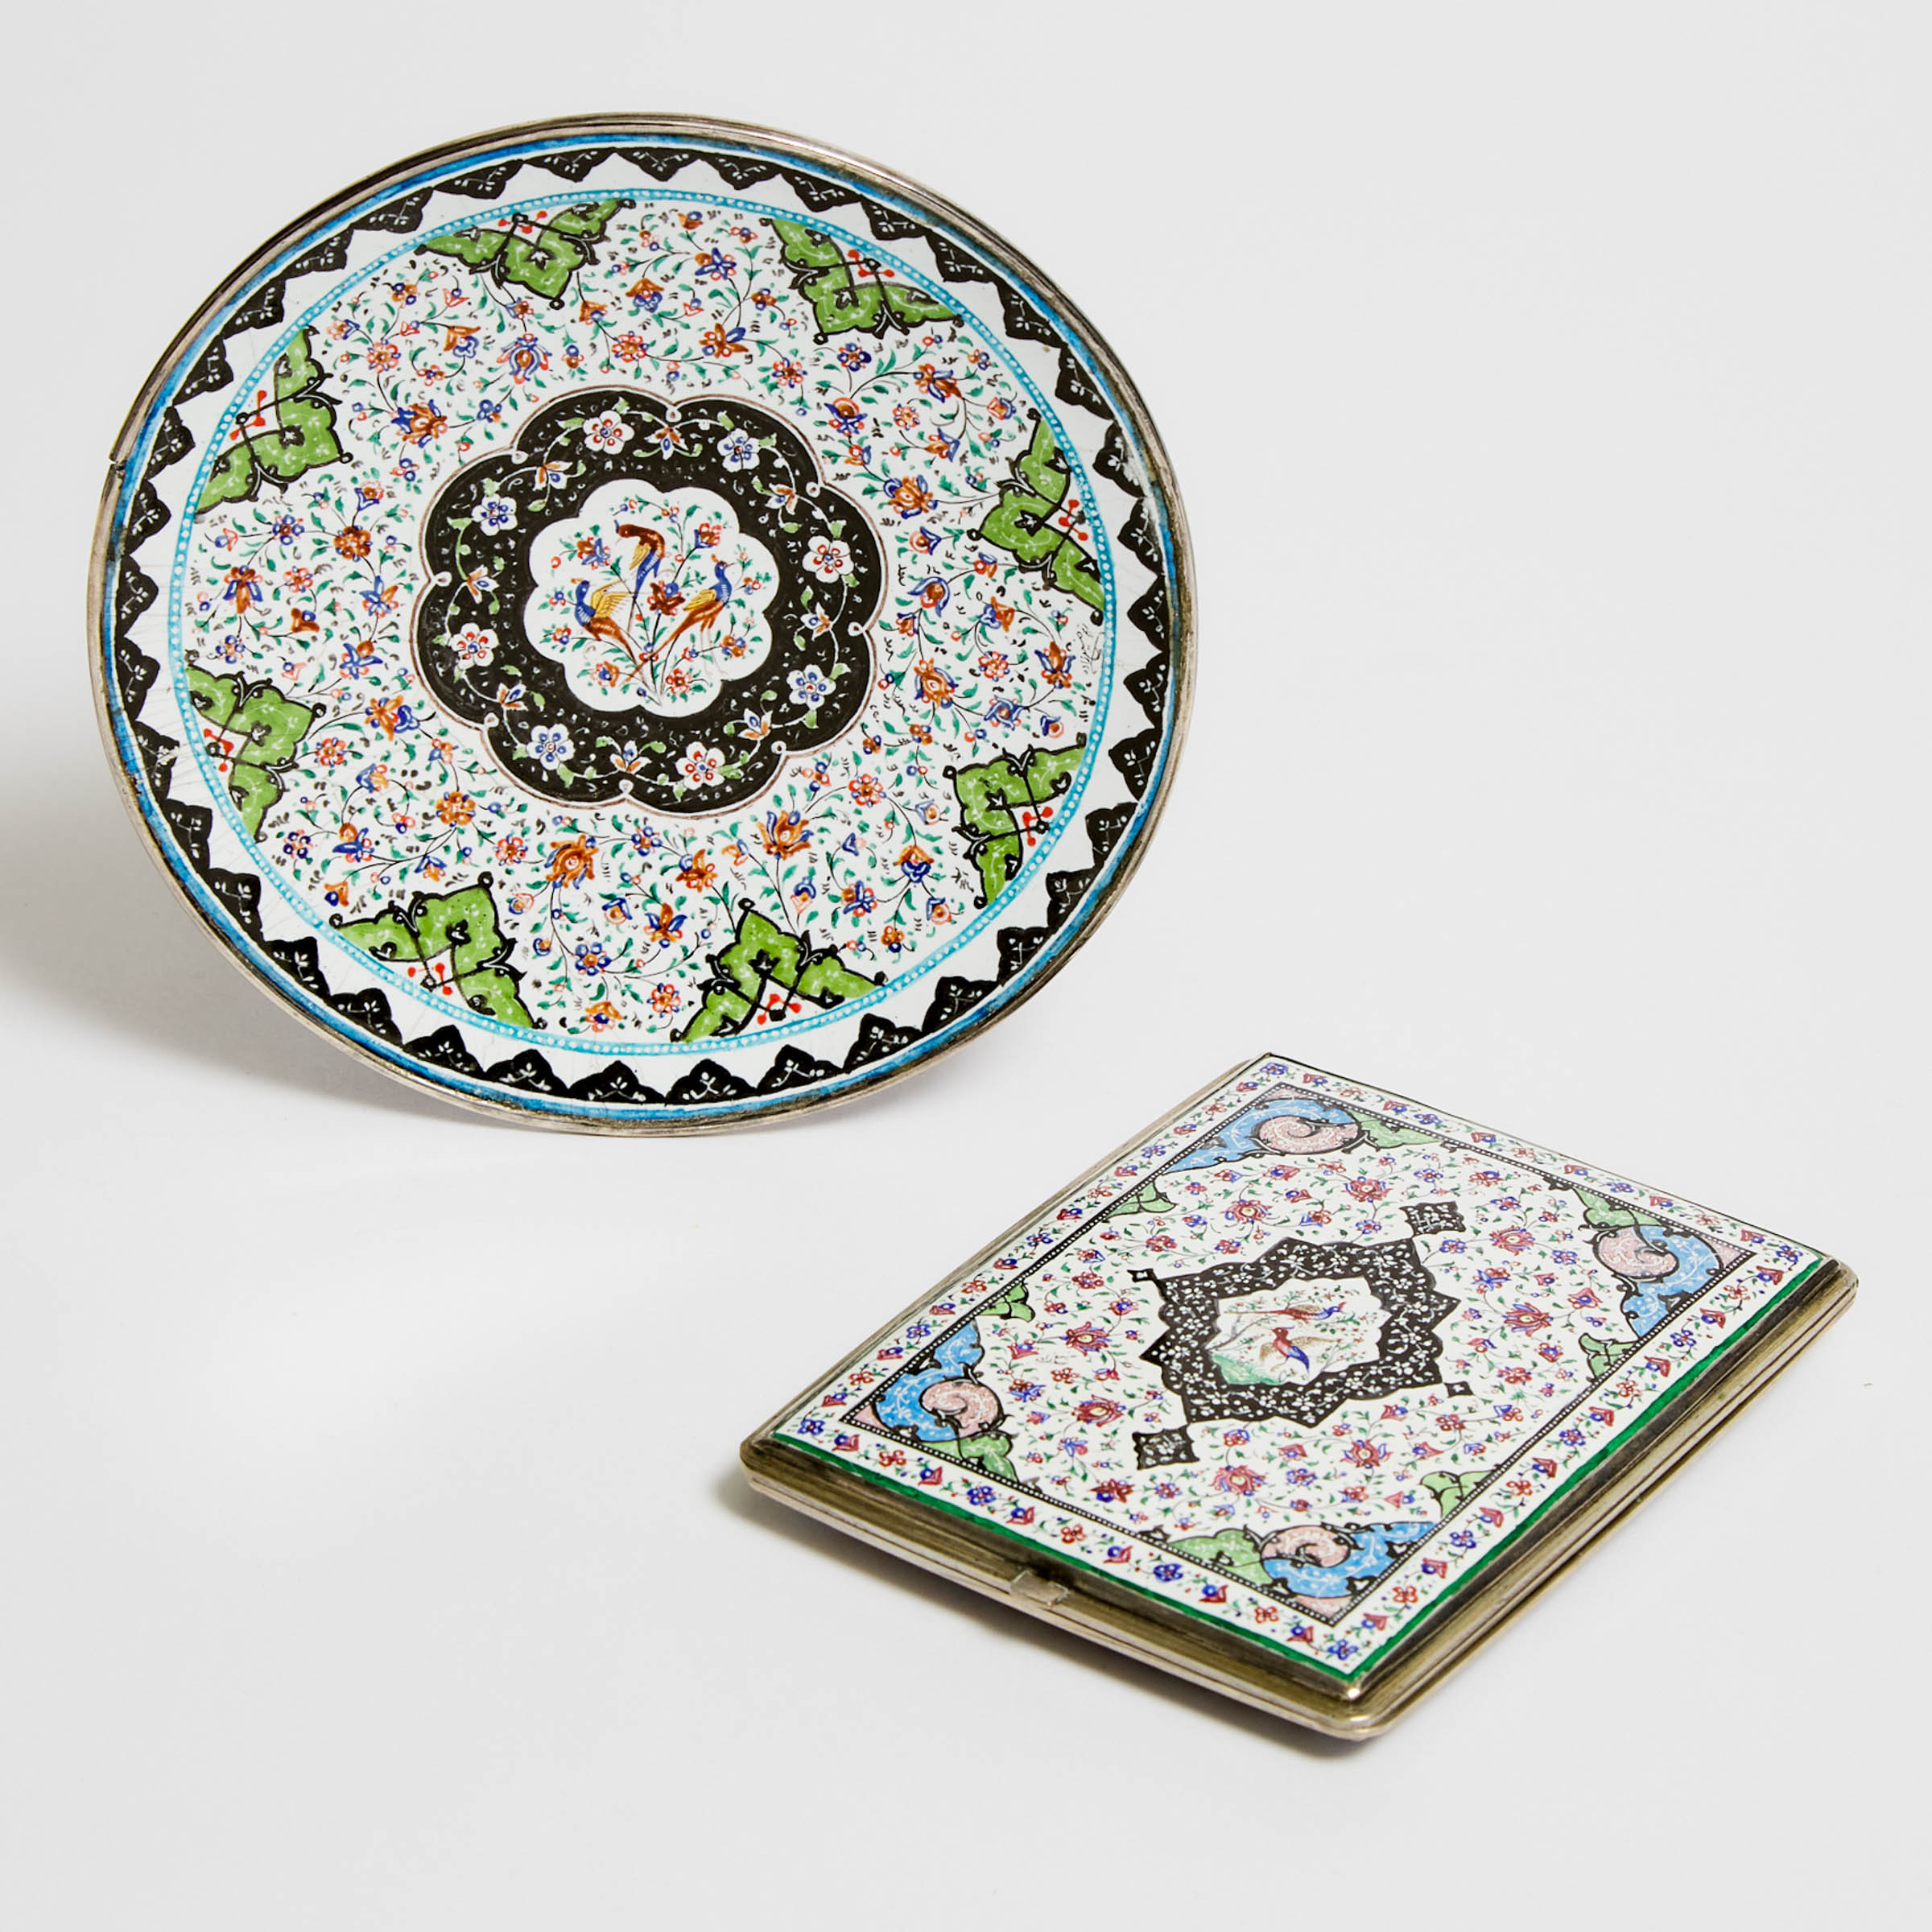 A Persian Cloisonn Enamel Card 2f2cab